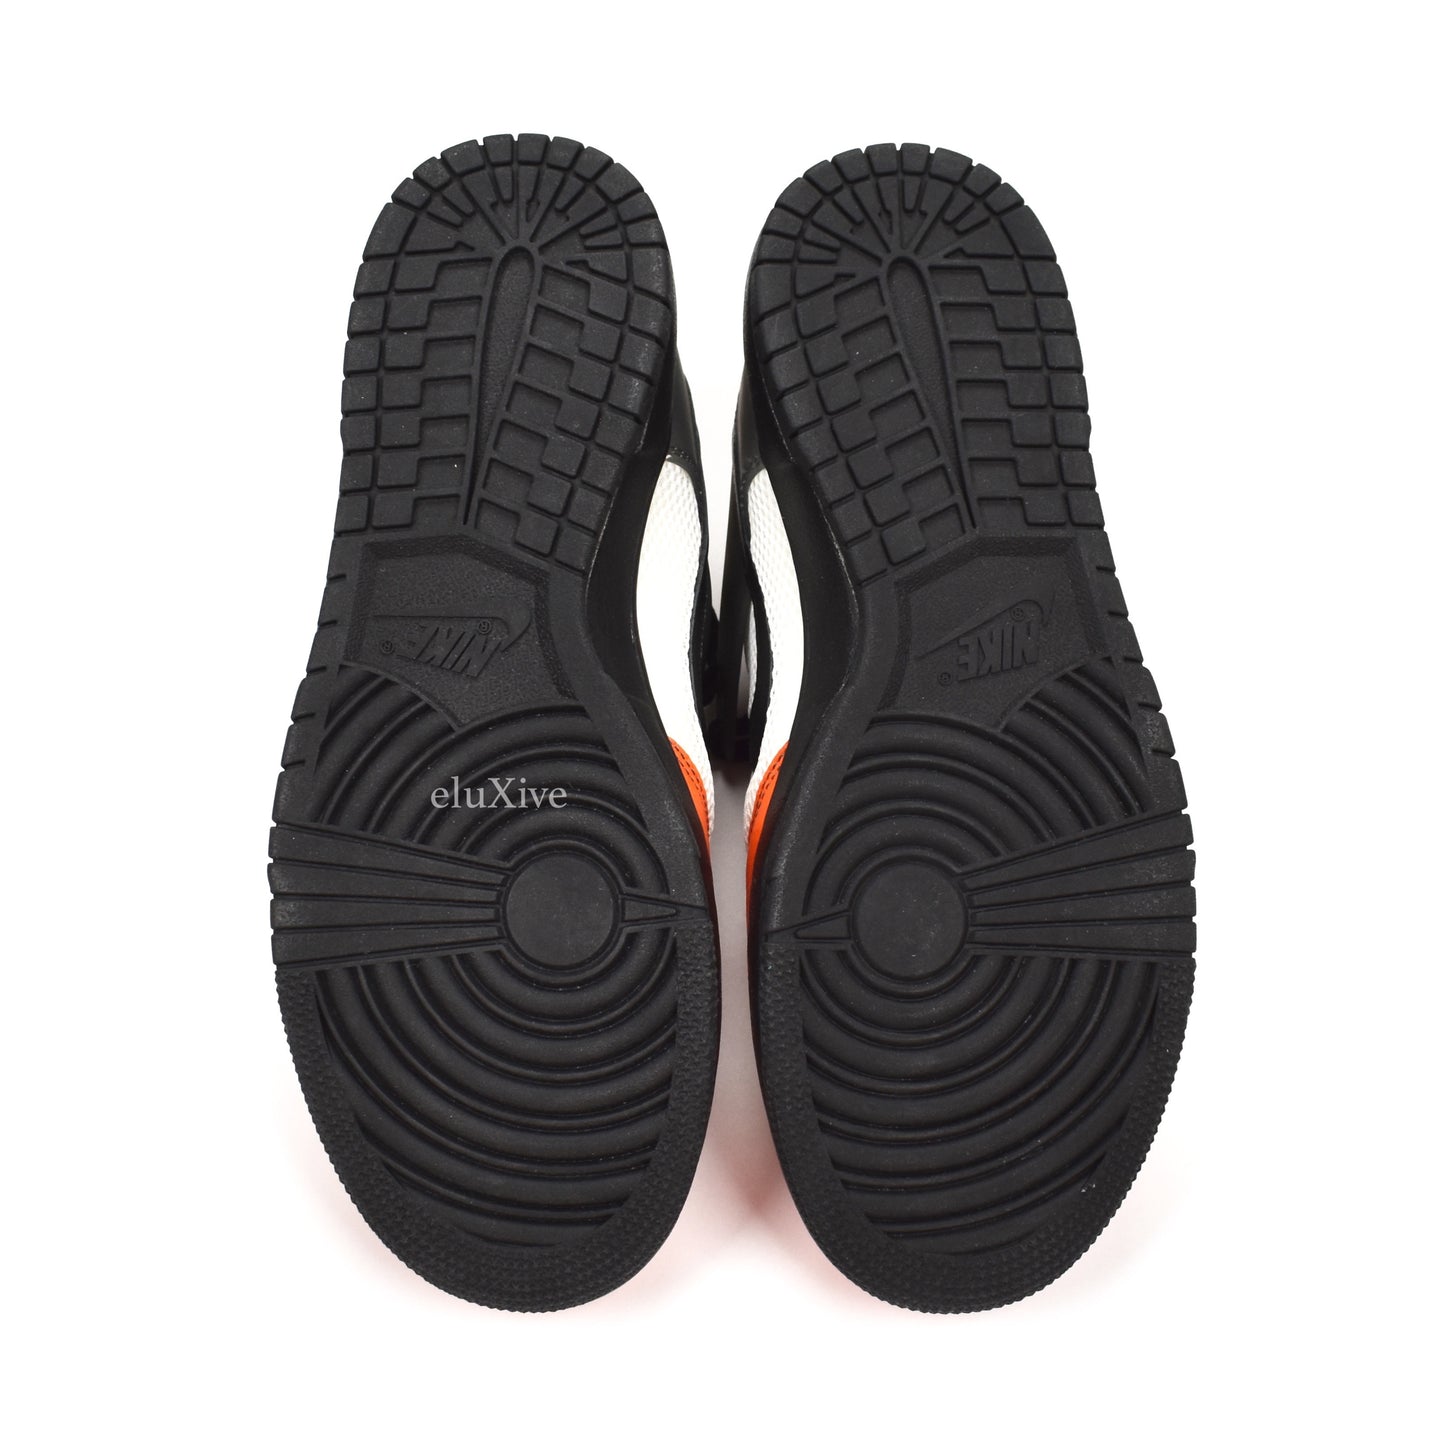 Nike - Air Zoom Dunkesto (White/Black/Orange)